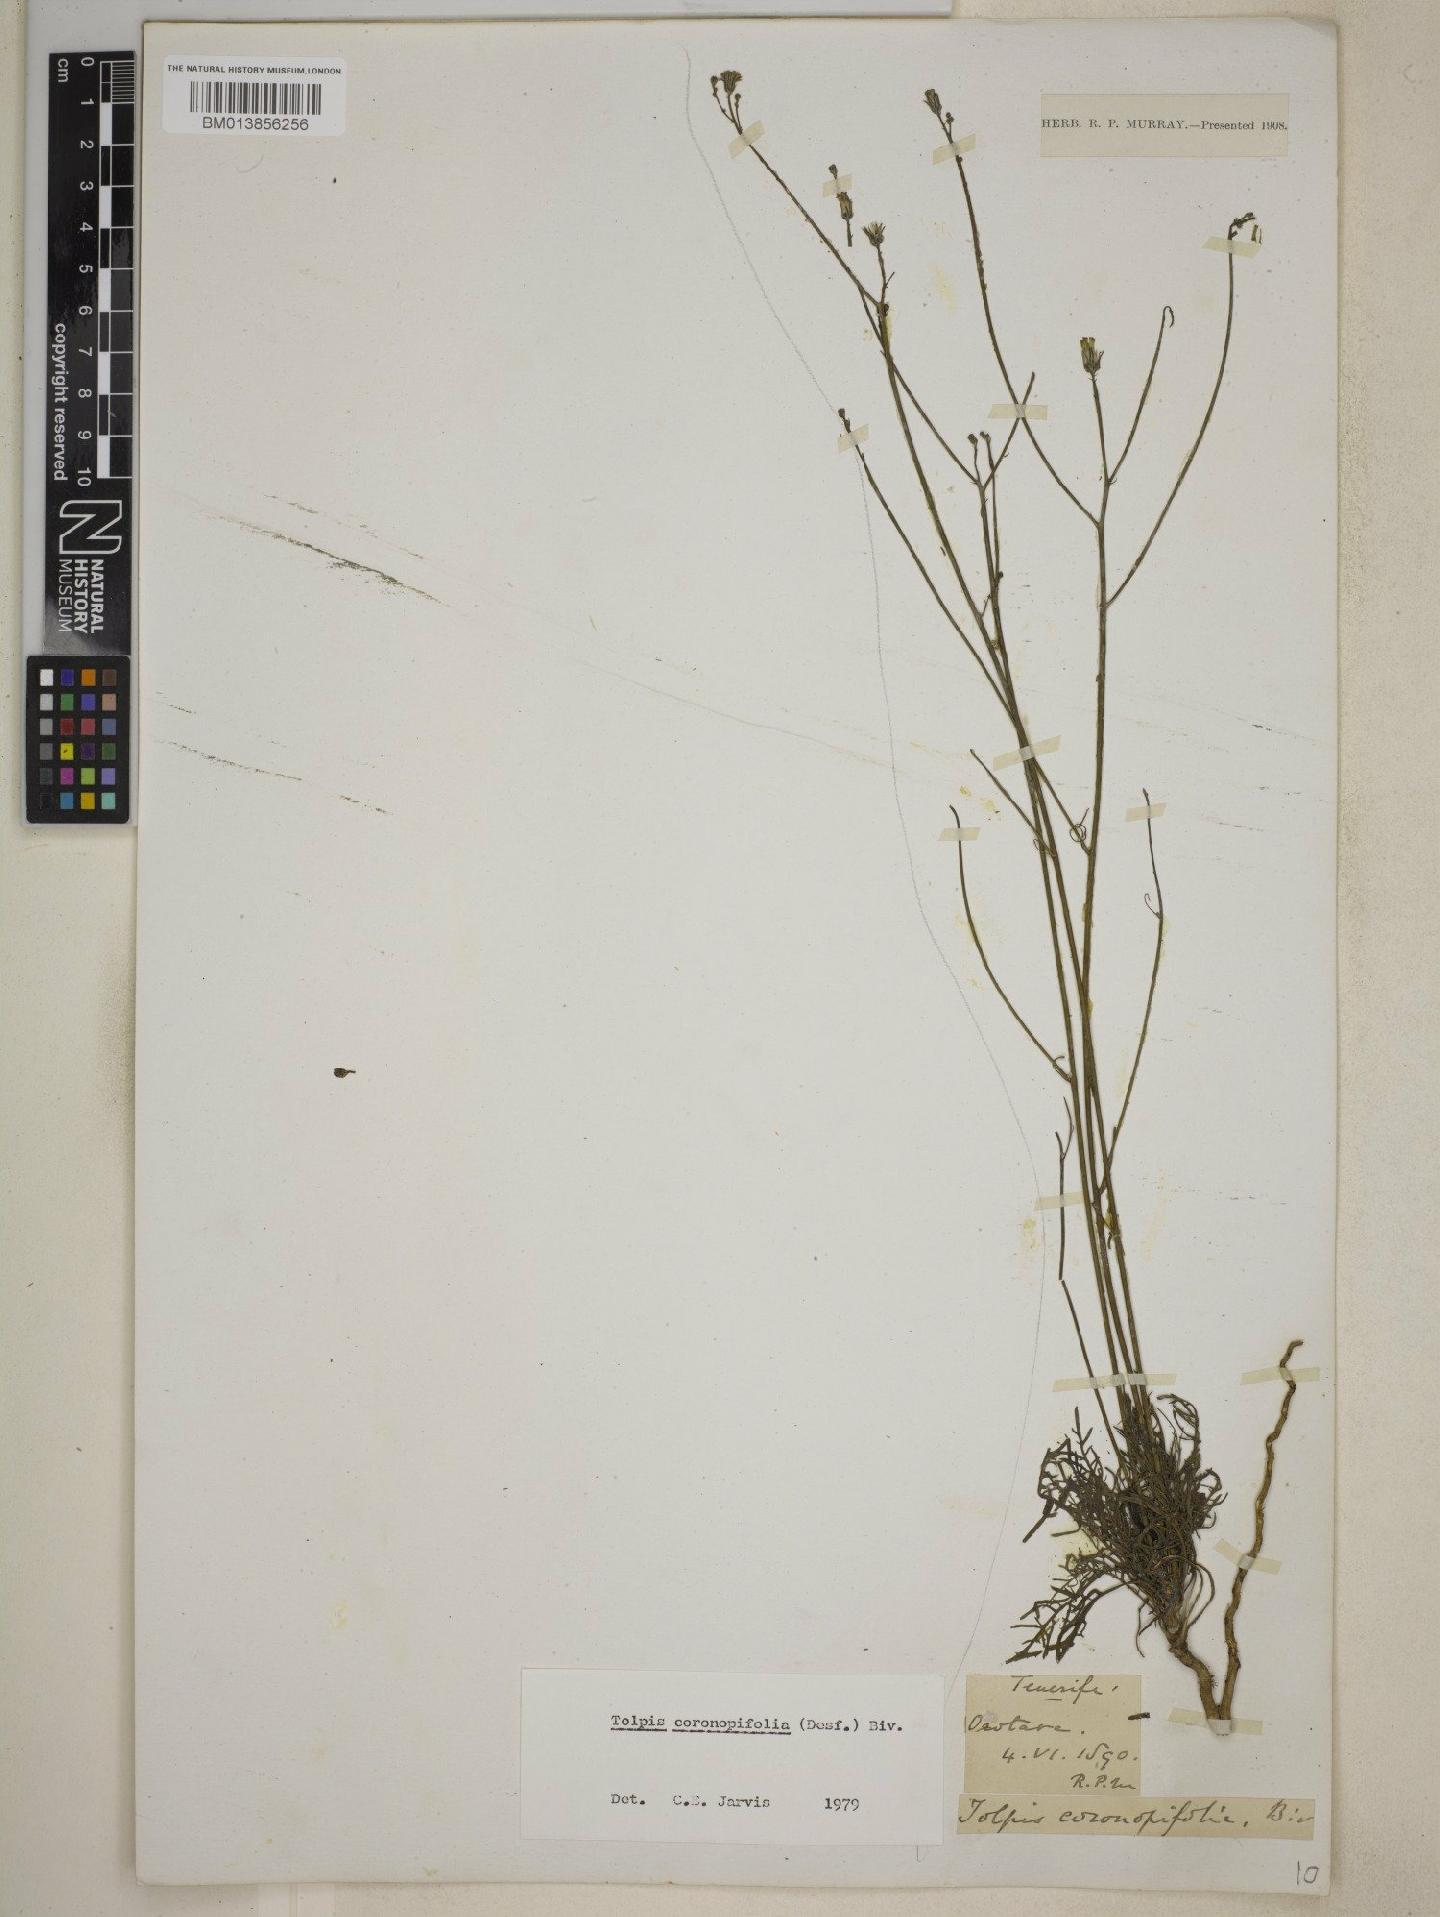 To NHMUK collection (Tolpis coronopifolia (Desf.) Biv; NHMUK:ecatalogue:9073014)